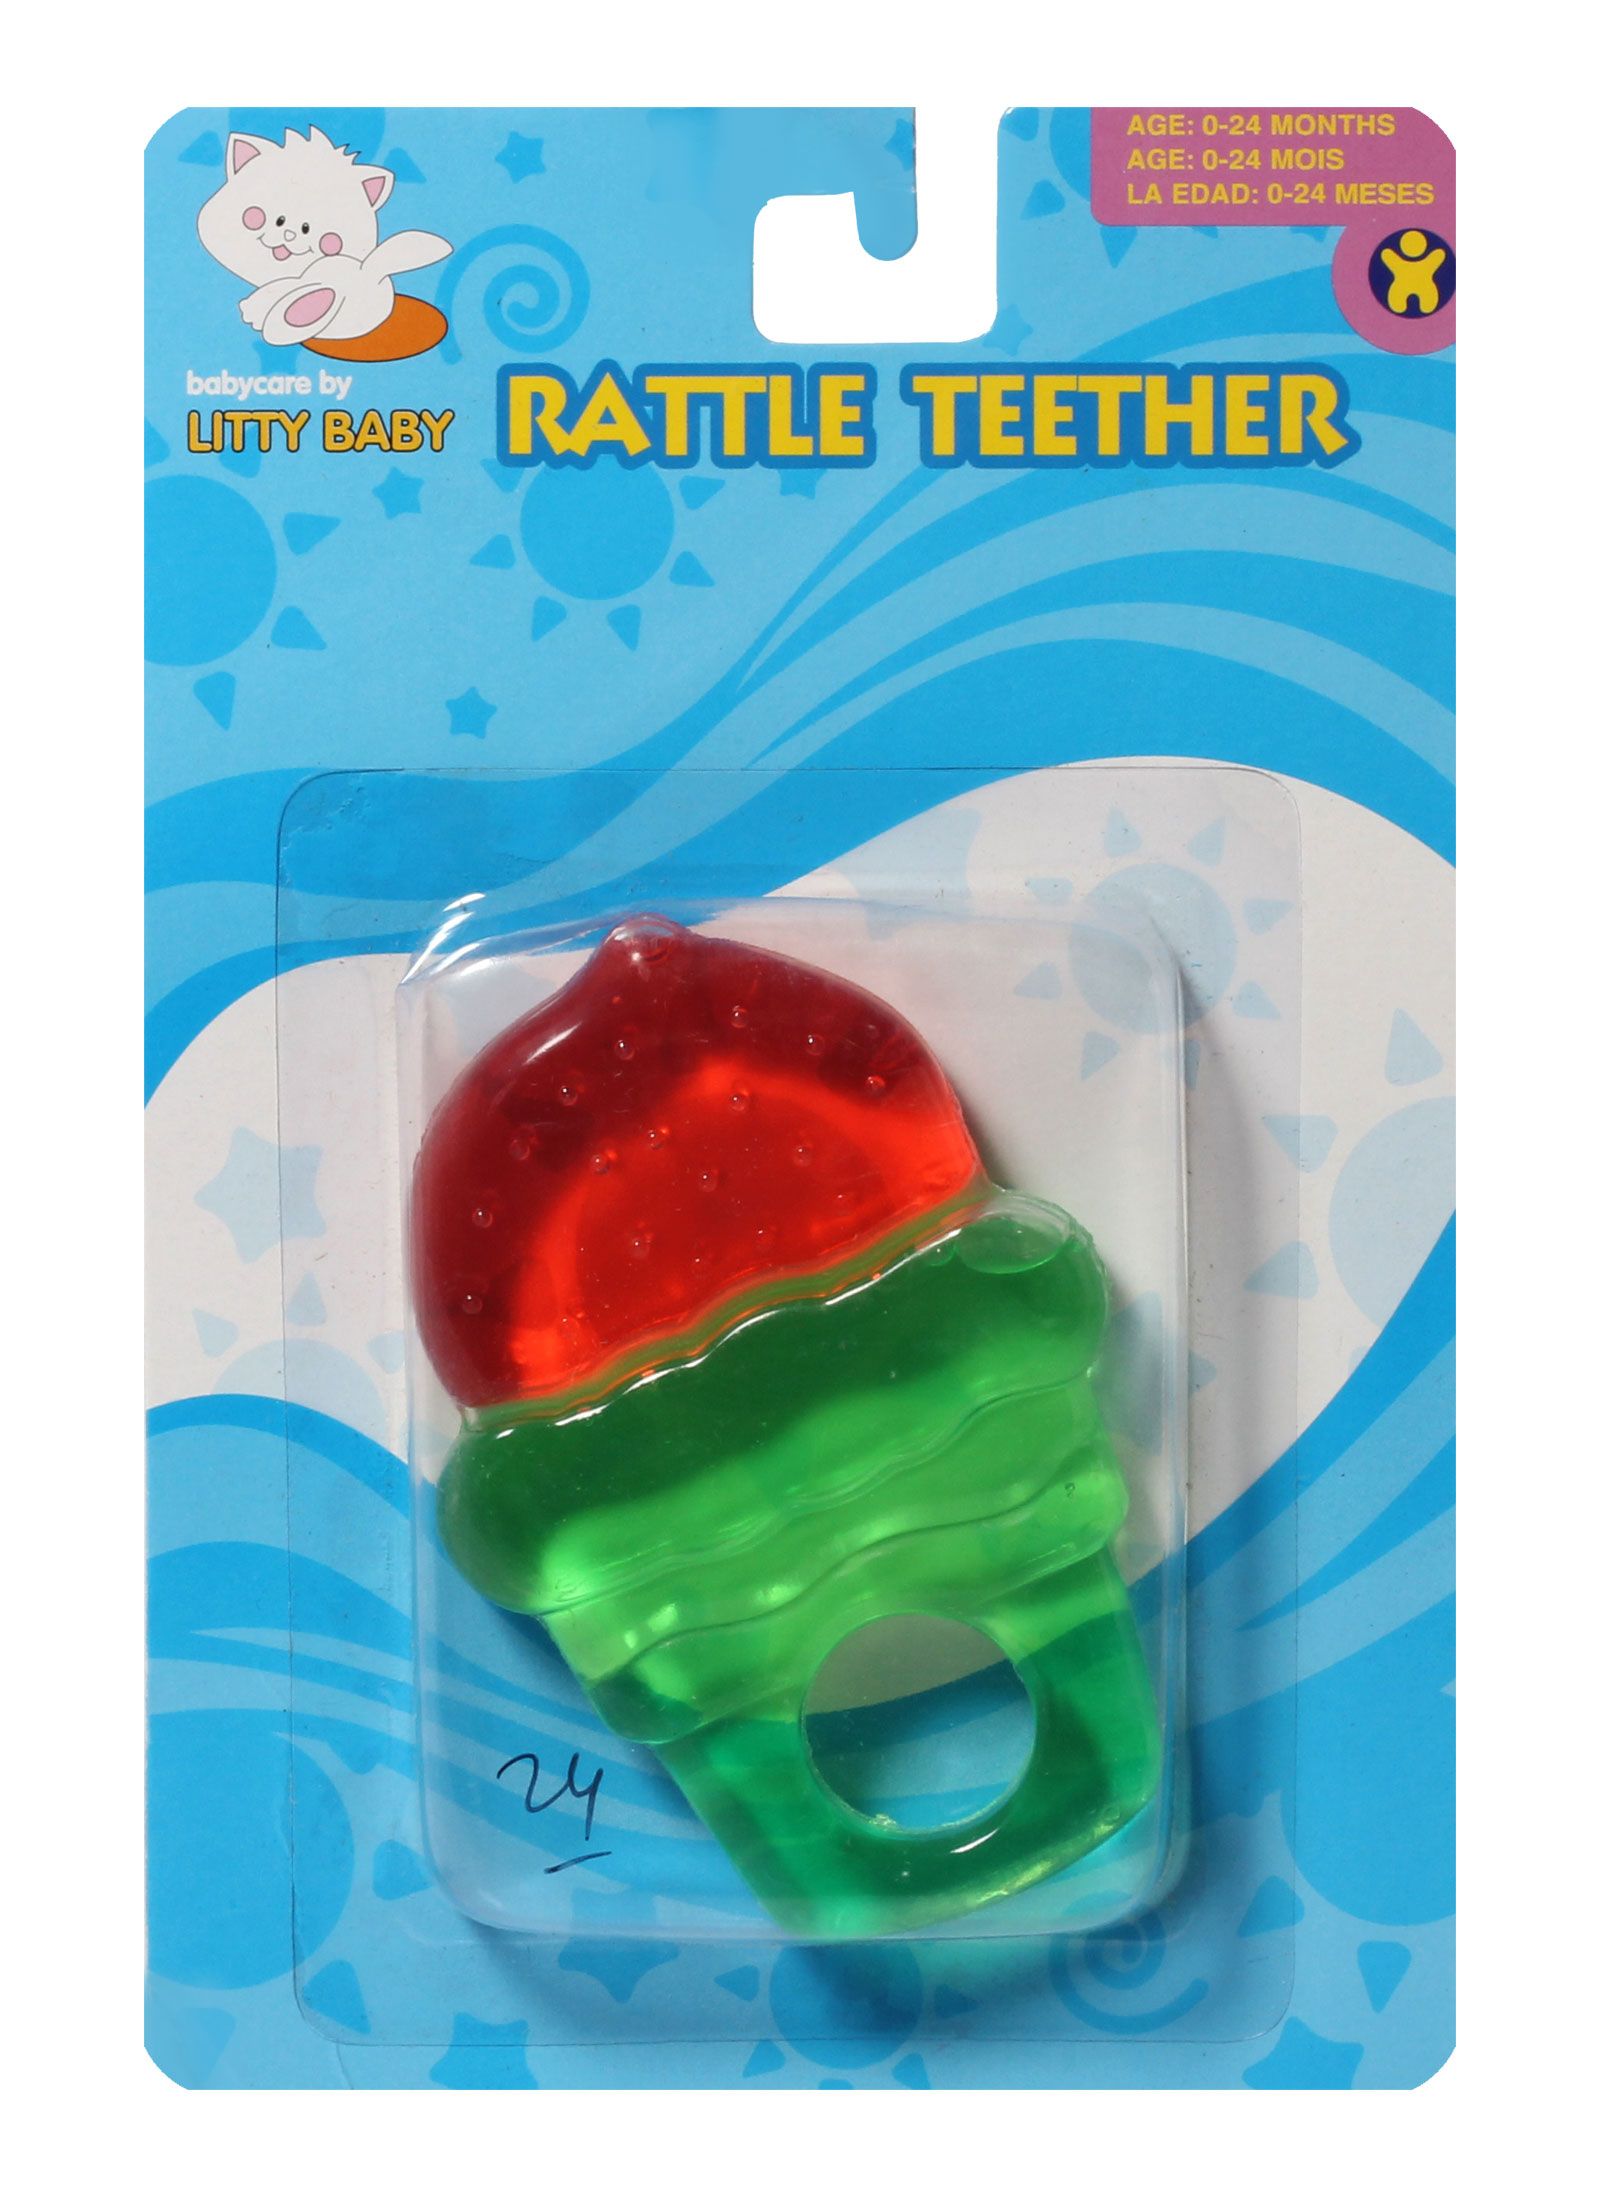 Litty Baby - Rattle Teether